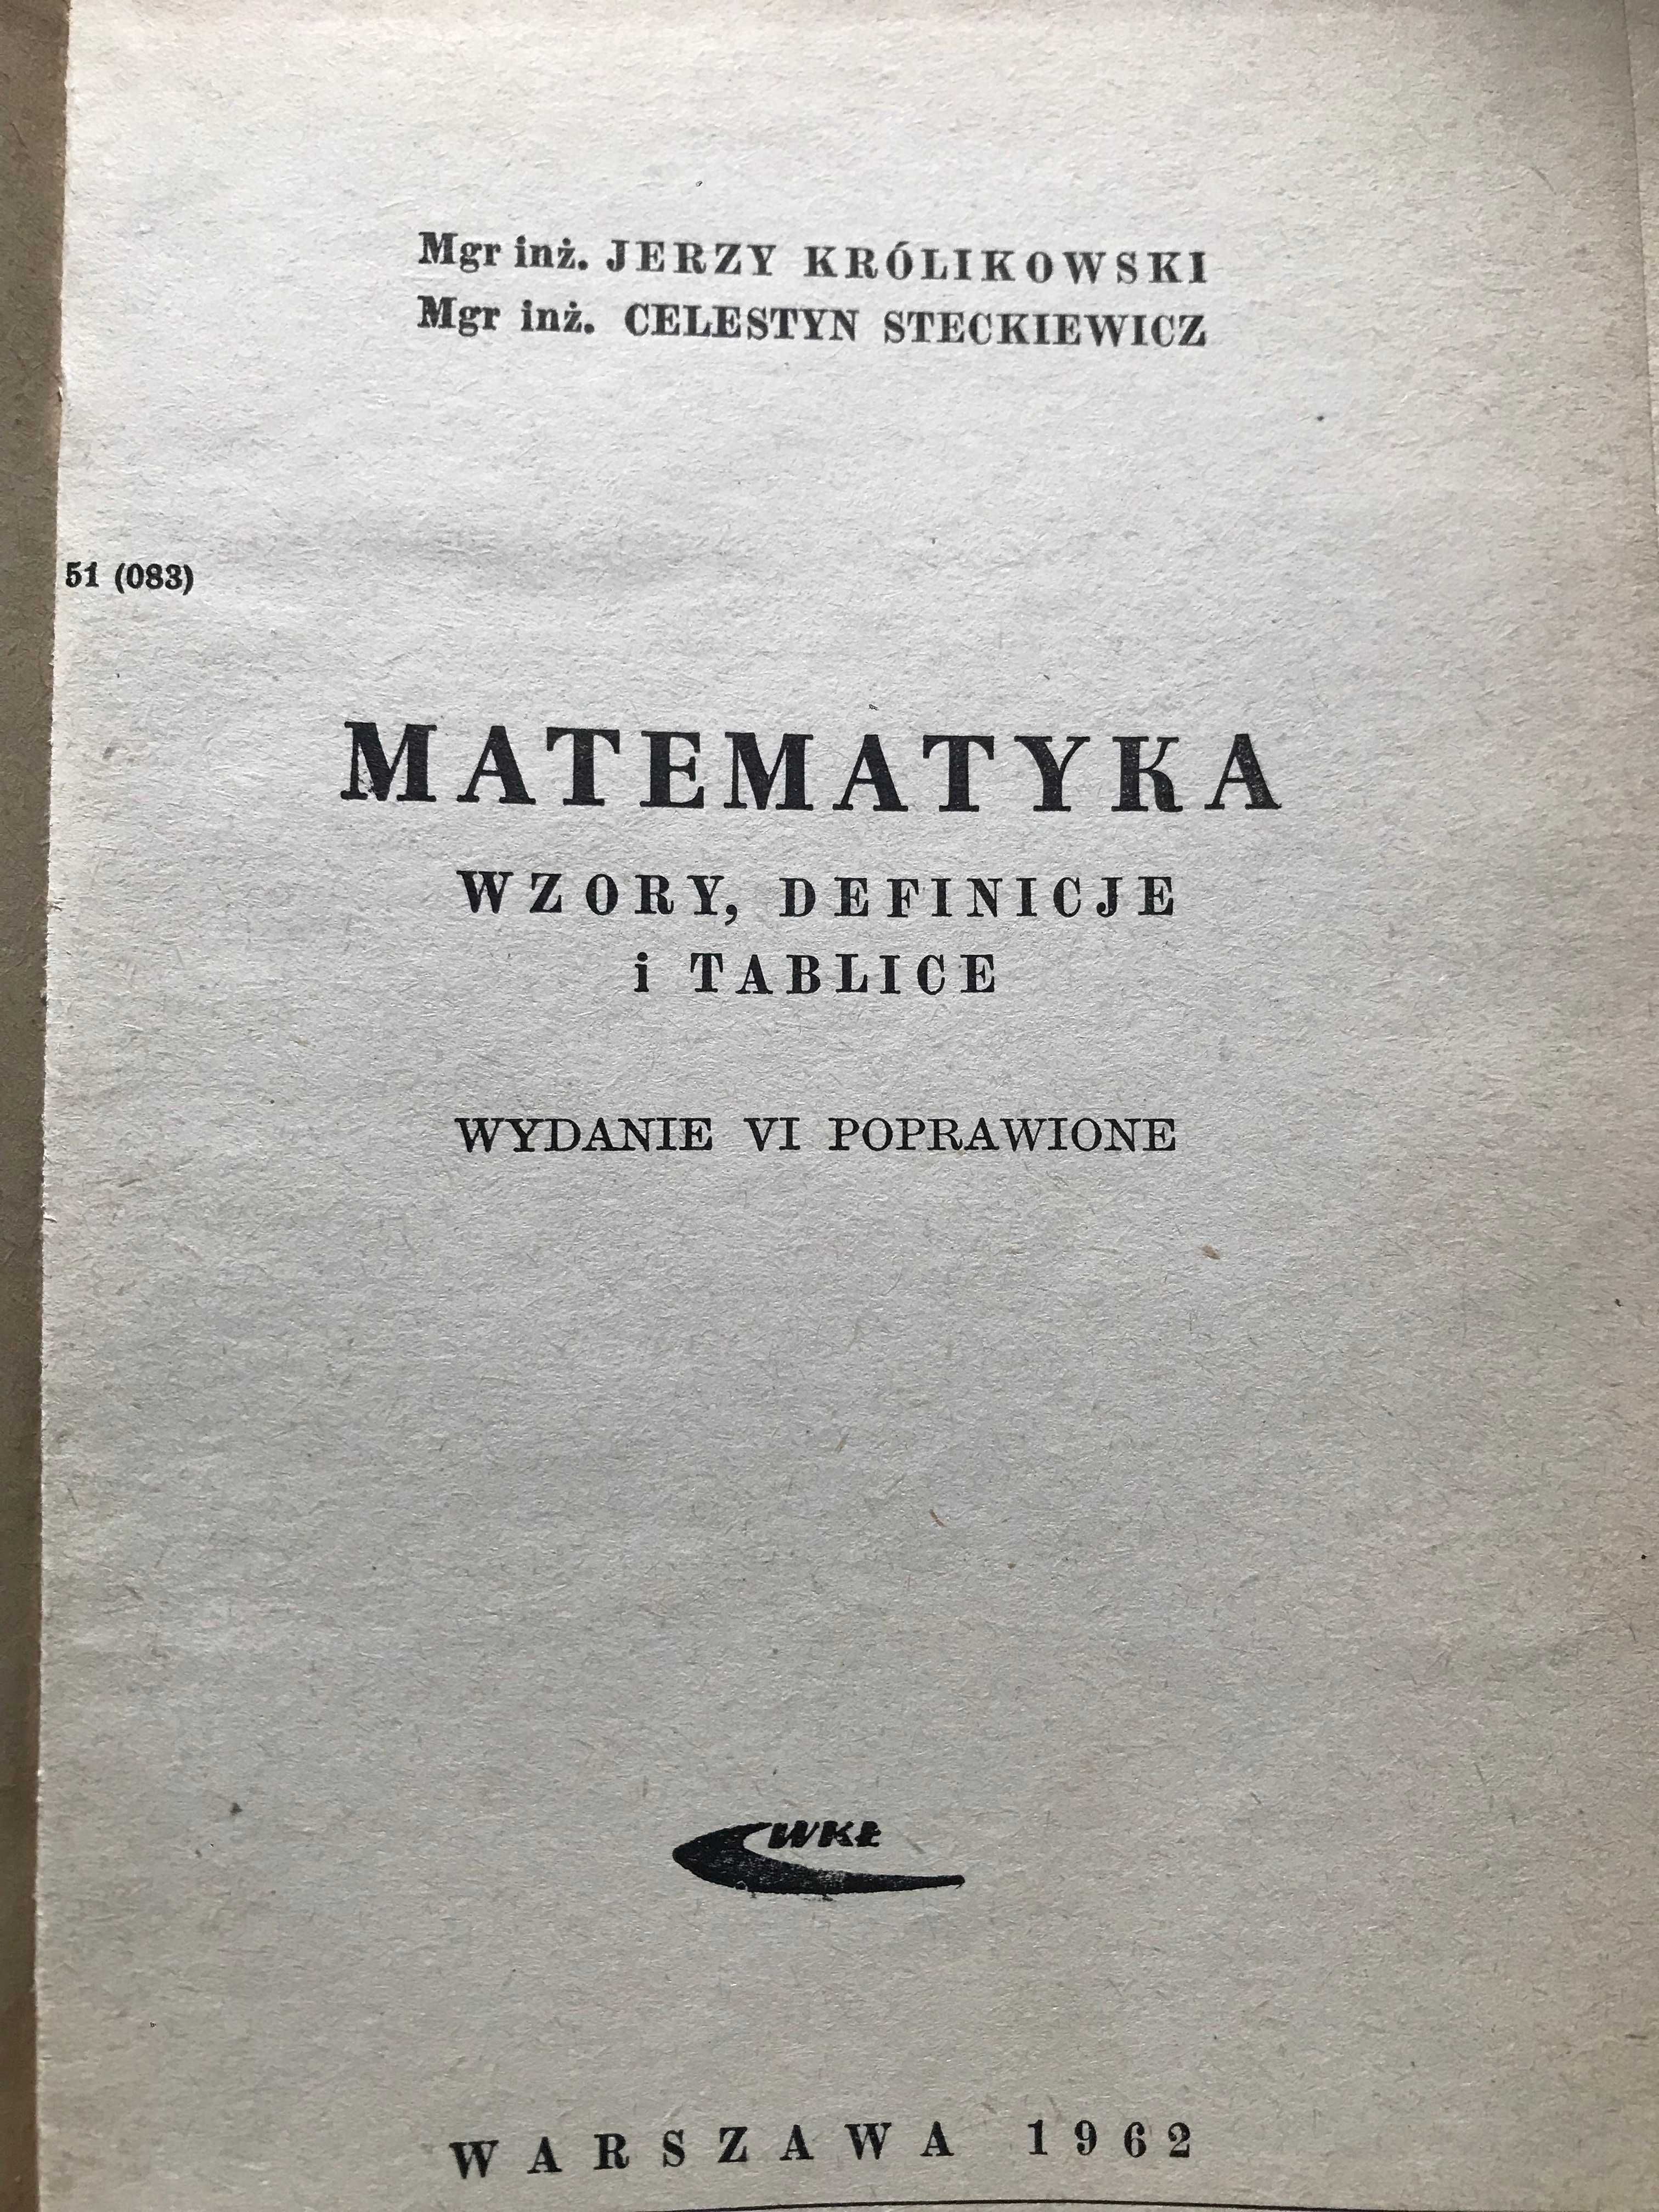 Matematyka- wzory, definicje, tablice. Antyk 1962